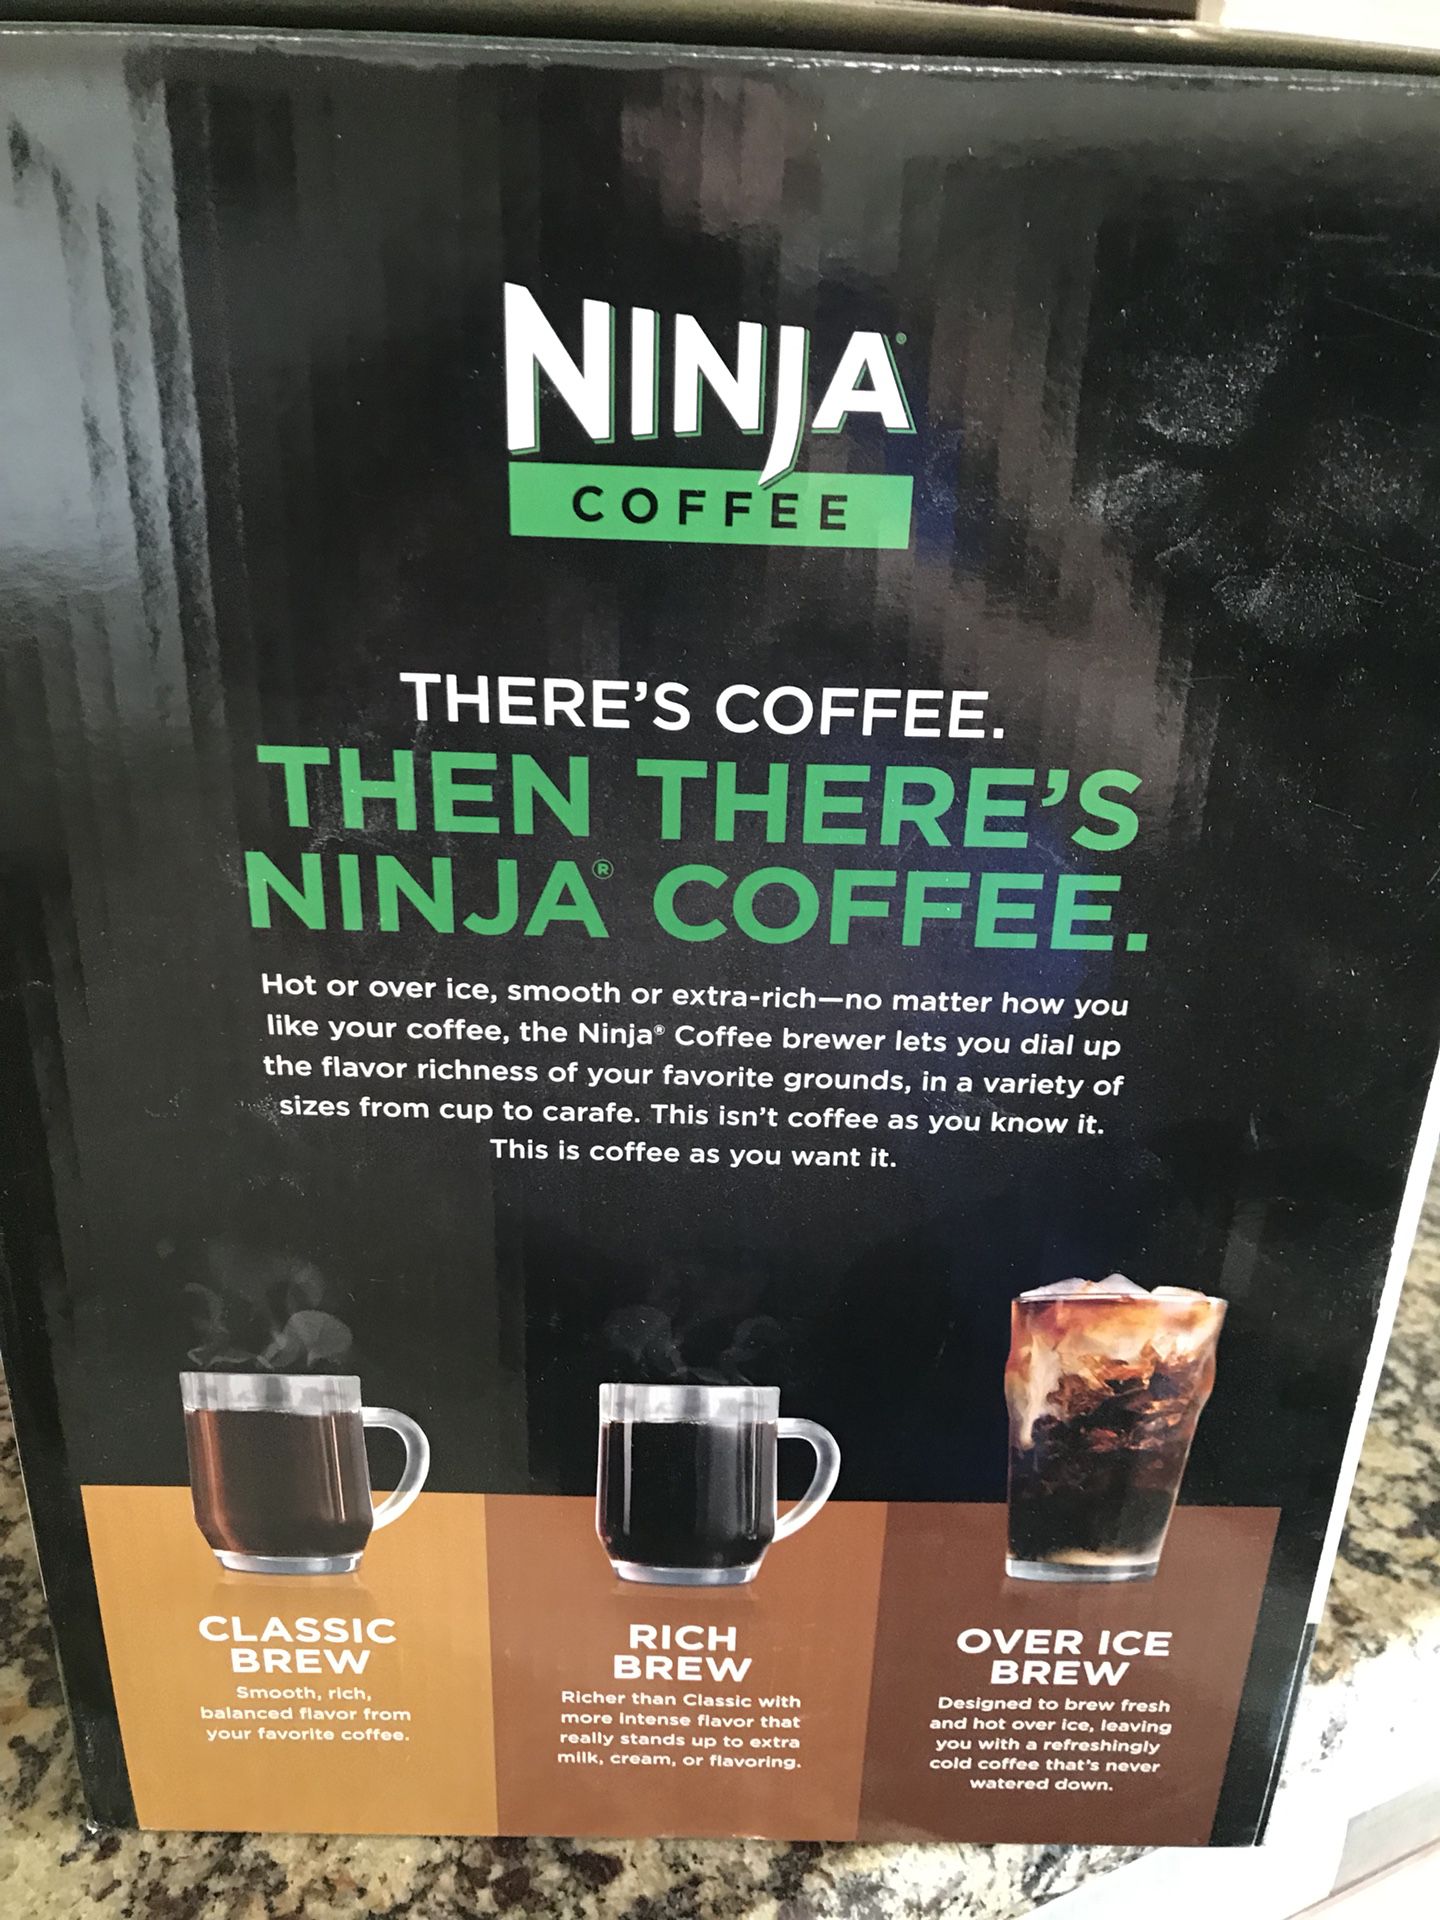 Ninja CF020 One Touch Auto-iQ Coffee Brewer Machine with Coffee